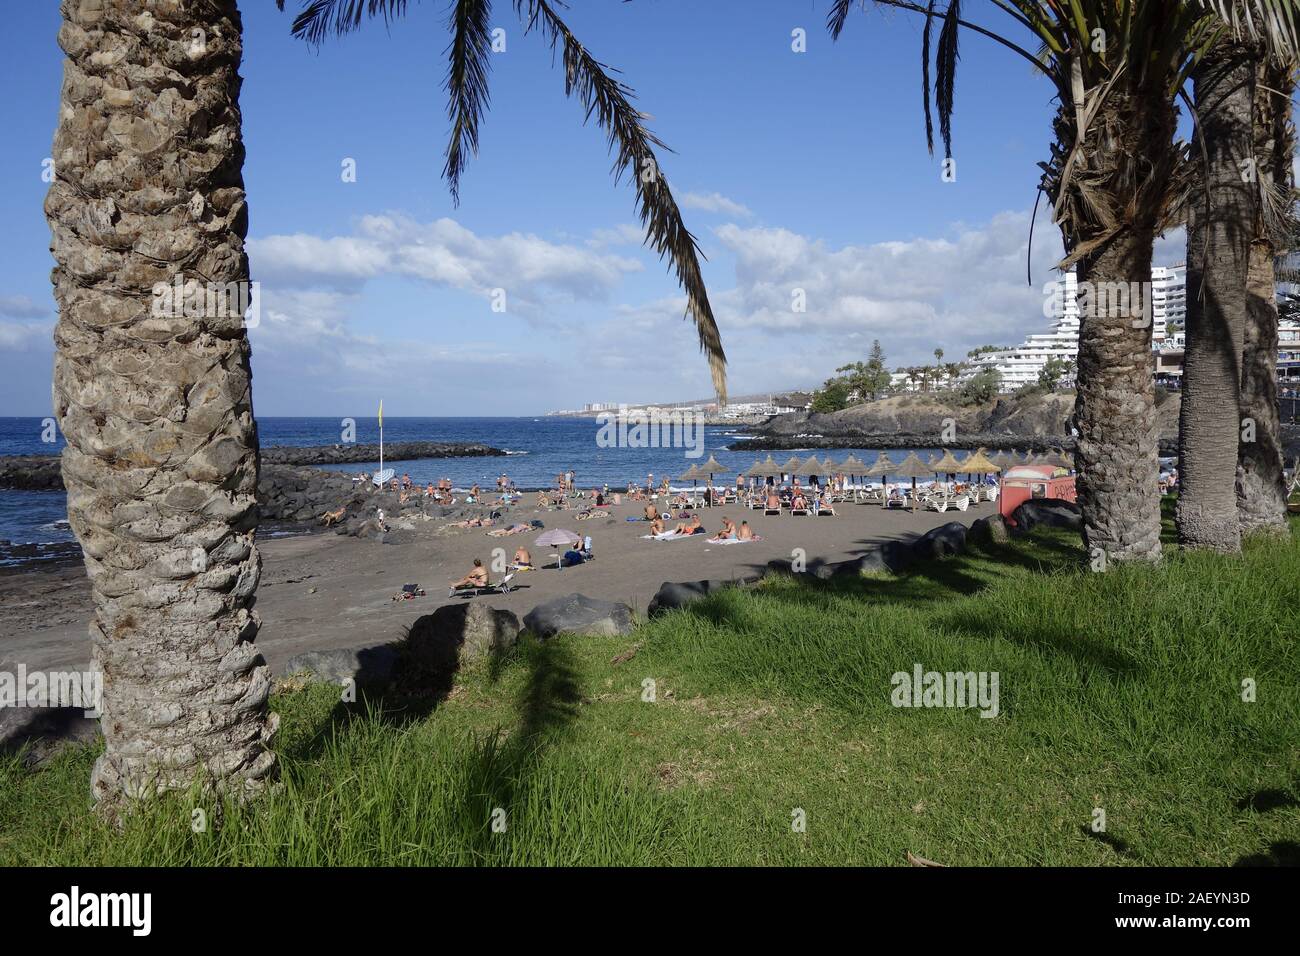 Tenerife, canary island, a spanish island, spain,off the coast of north west africa. Stock Photo